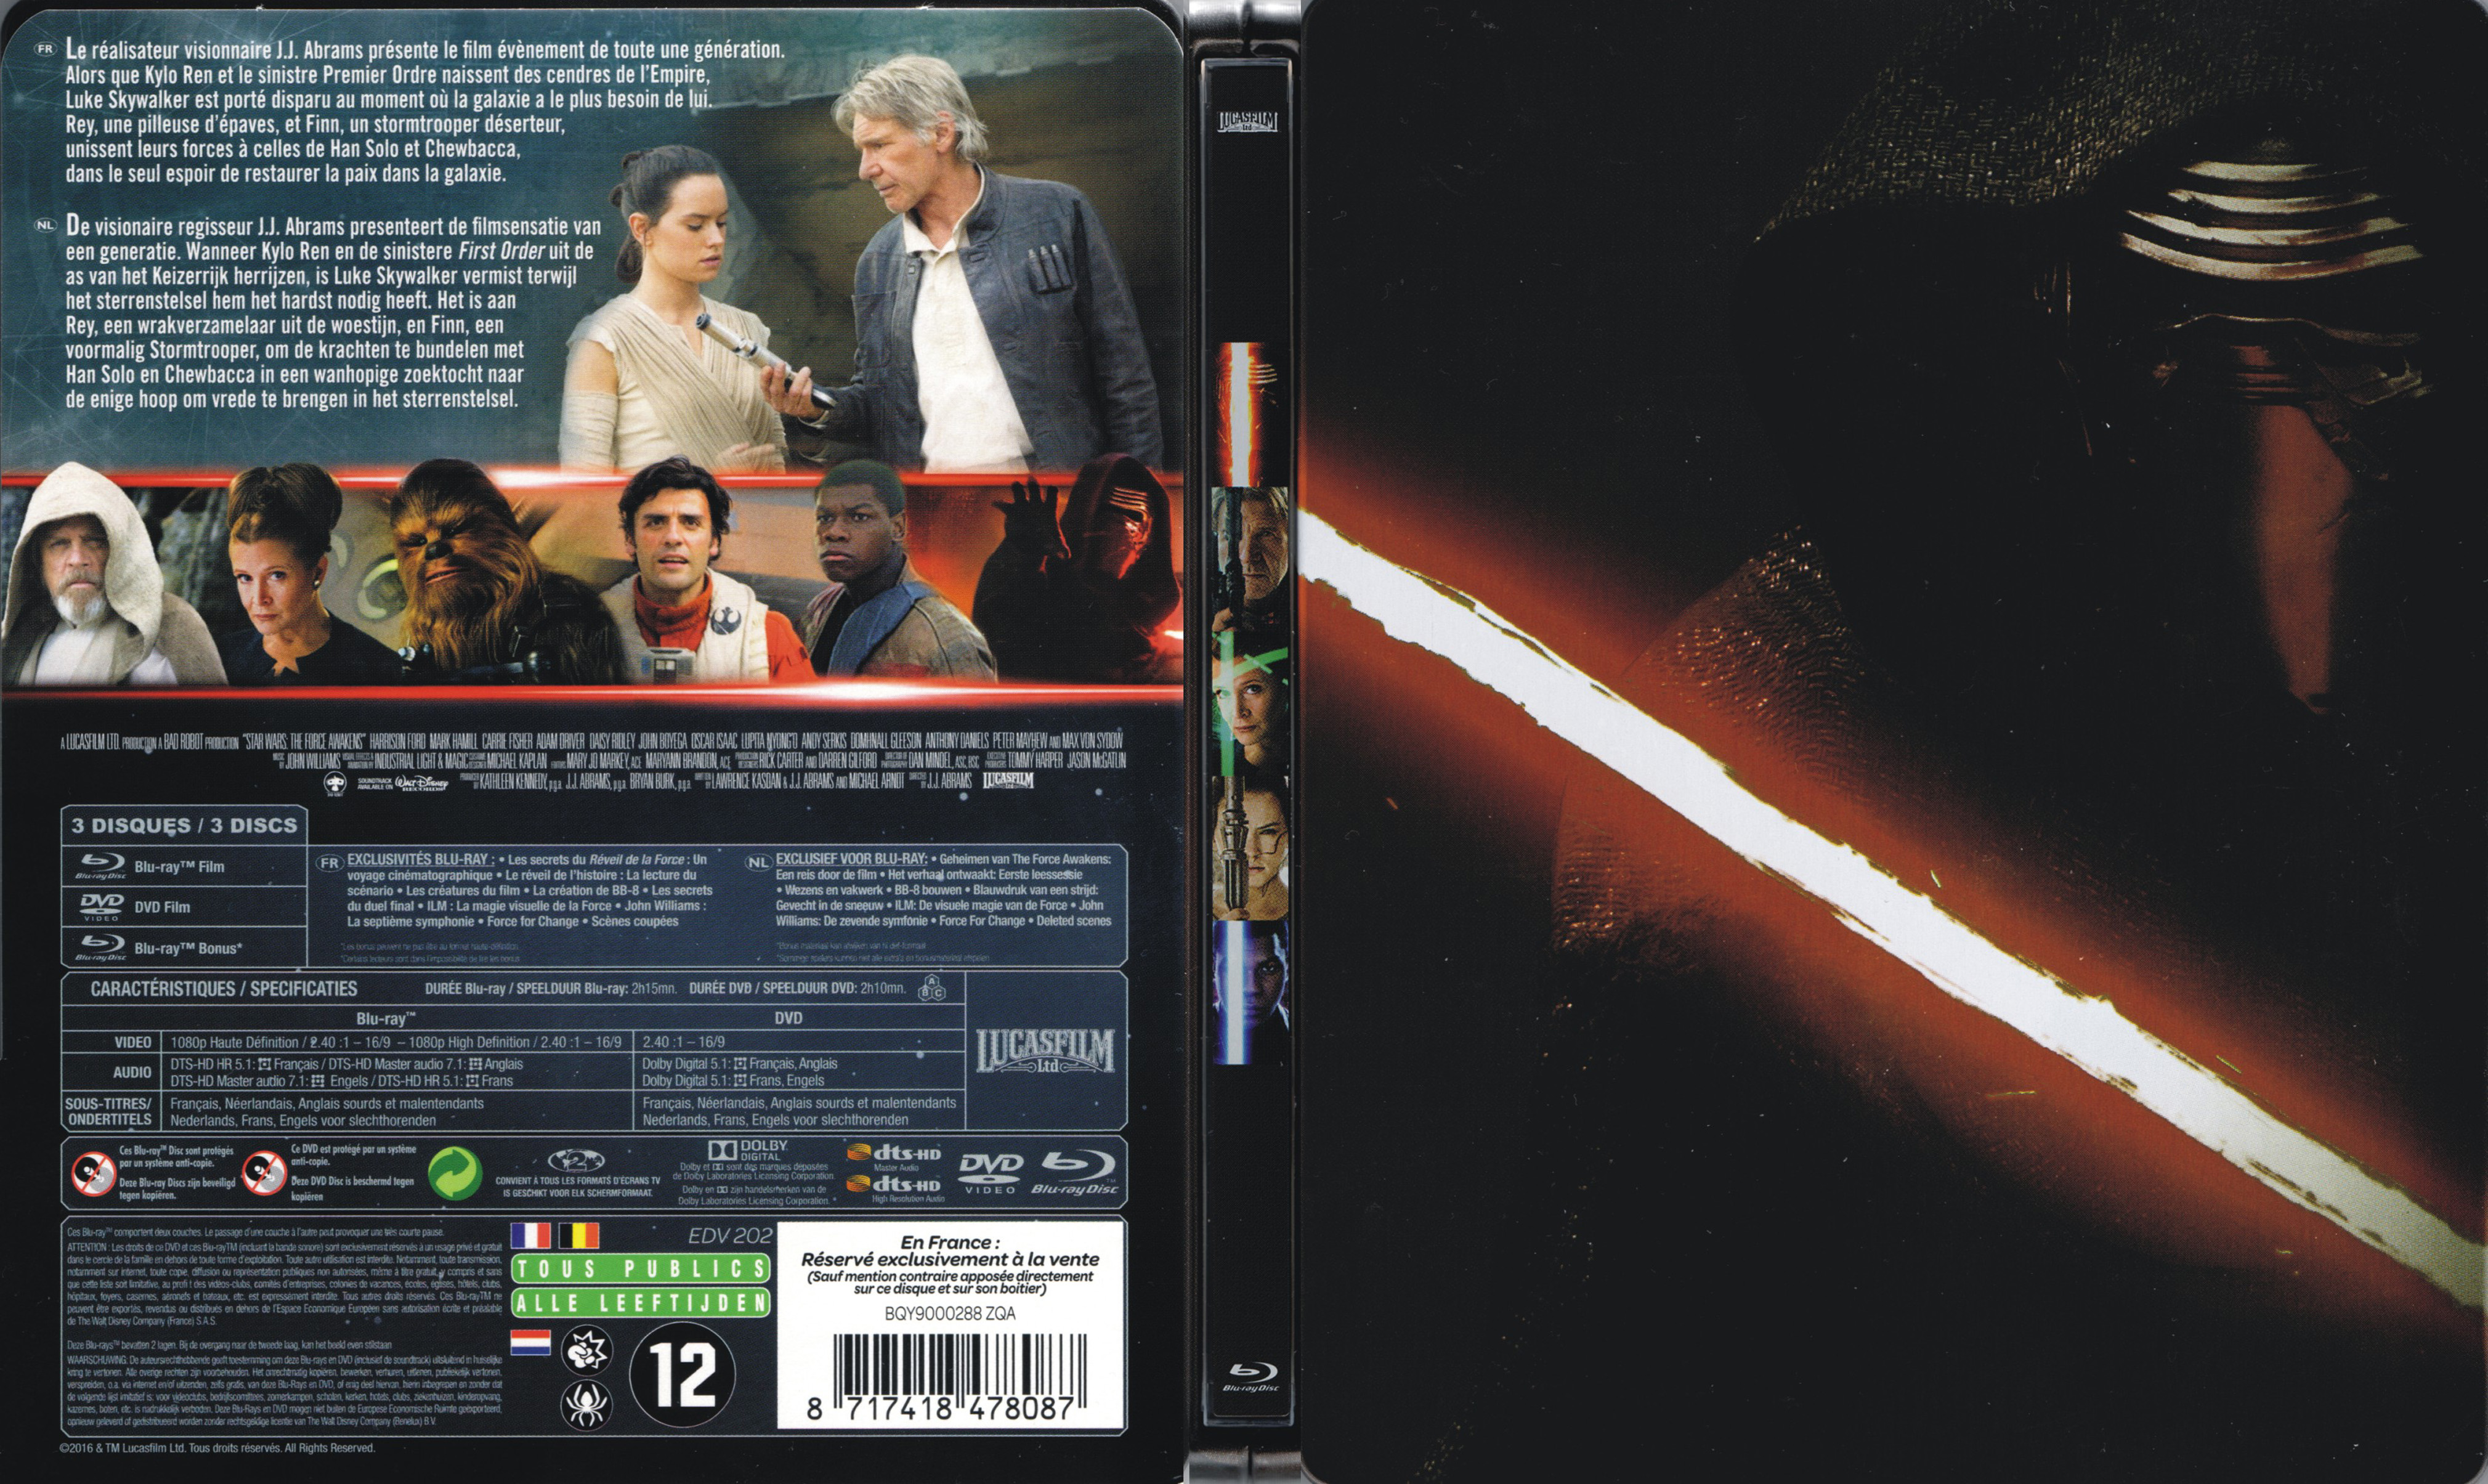 Jaquette DVD Star Wars Episode VII Le Reveil de la Force (BLU-RAY) v2